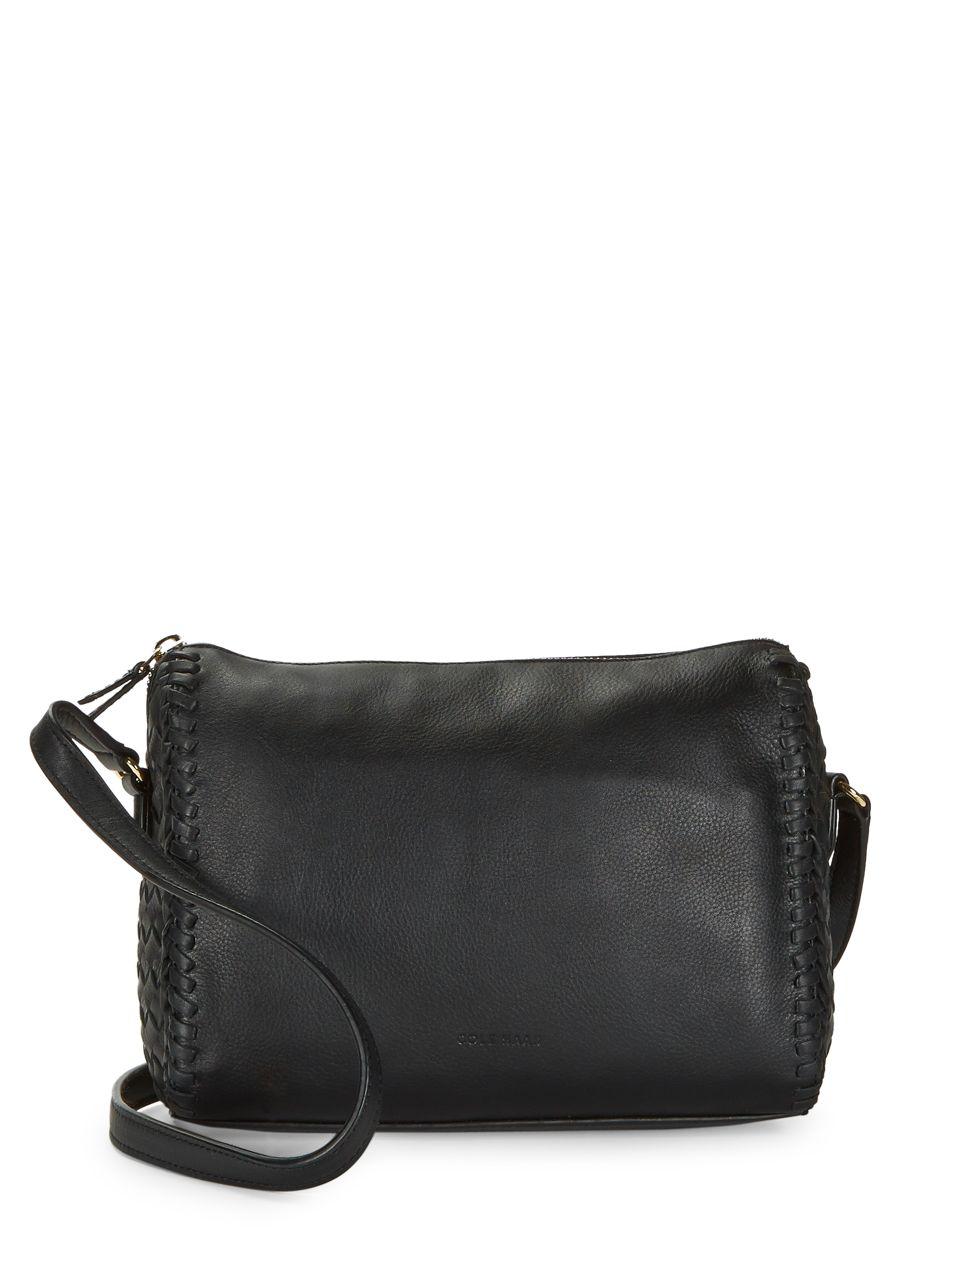 Cole Haan Medium Leather Crossbody Bag in Black - Lyst